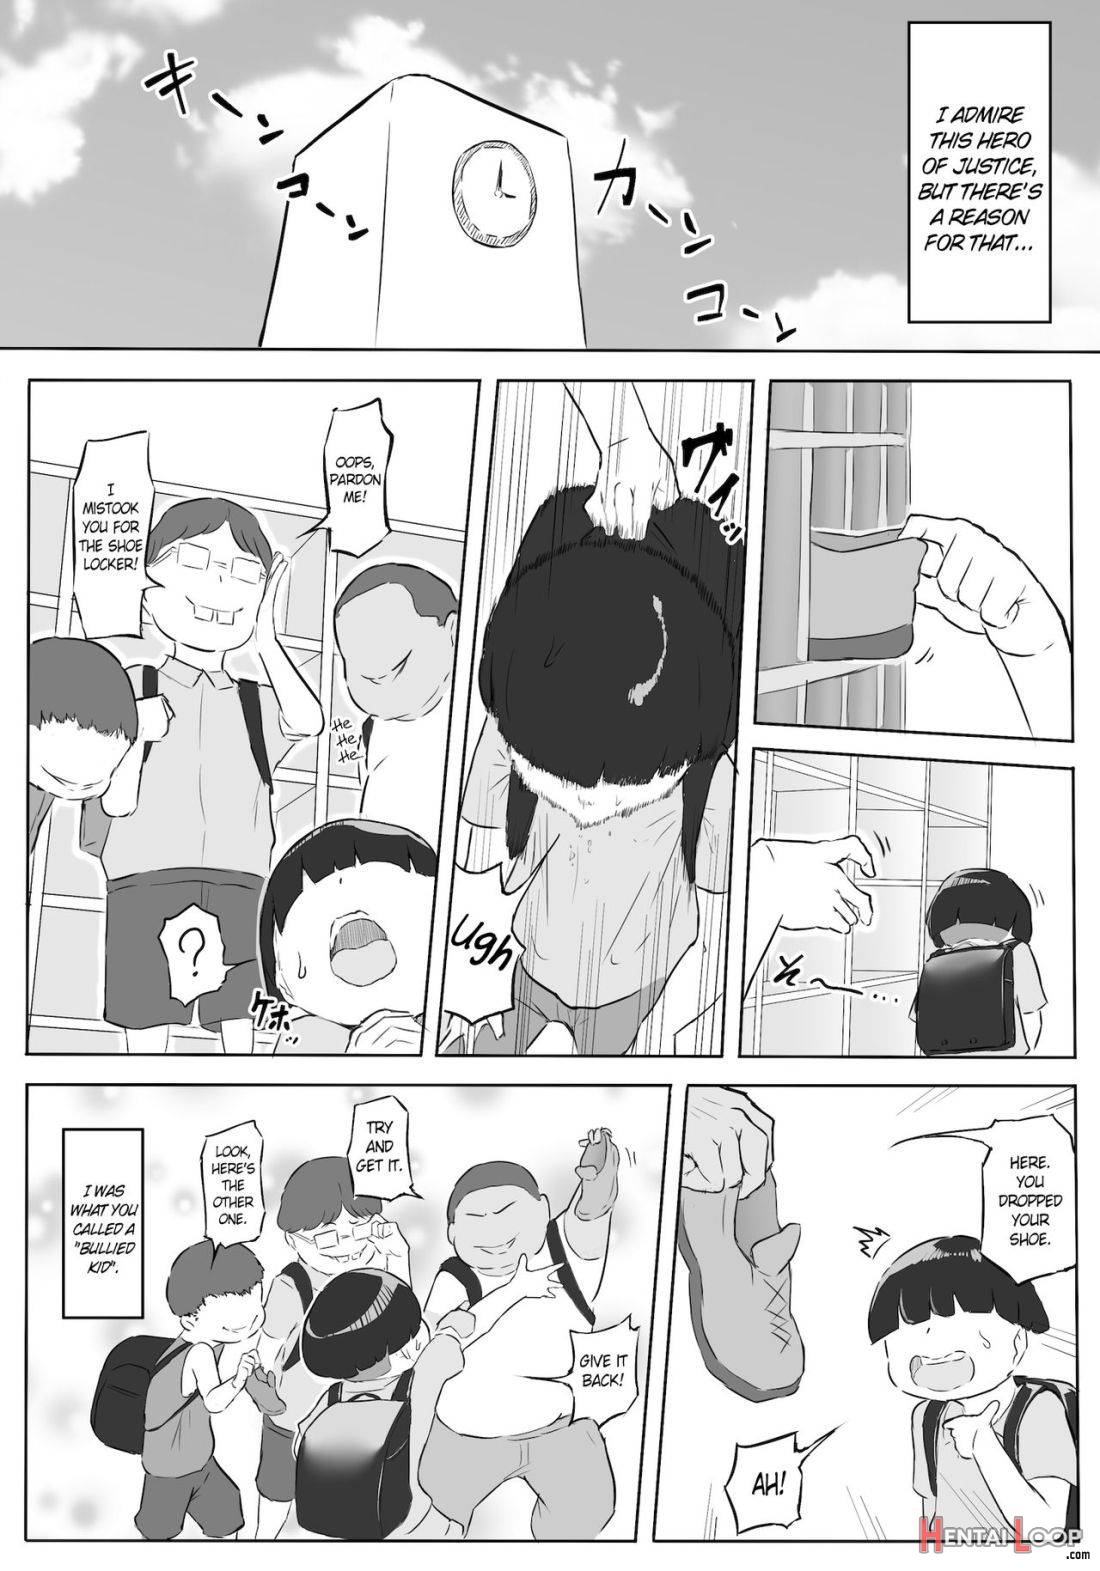 Page 6 of Boku wa Hero Paranoia Zenpen (by Owasobi) - Hentai doujinshi for  free at HentaiLoop